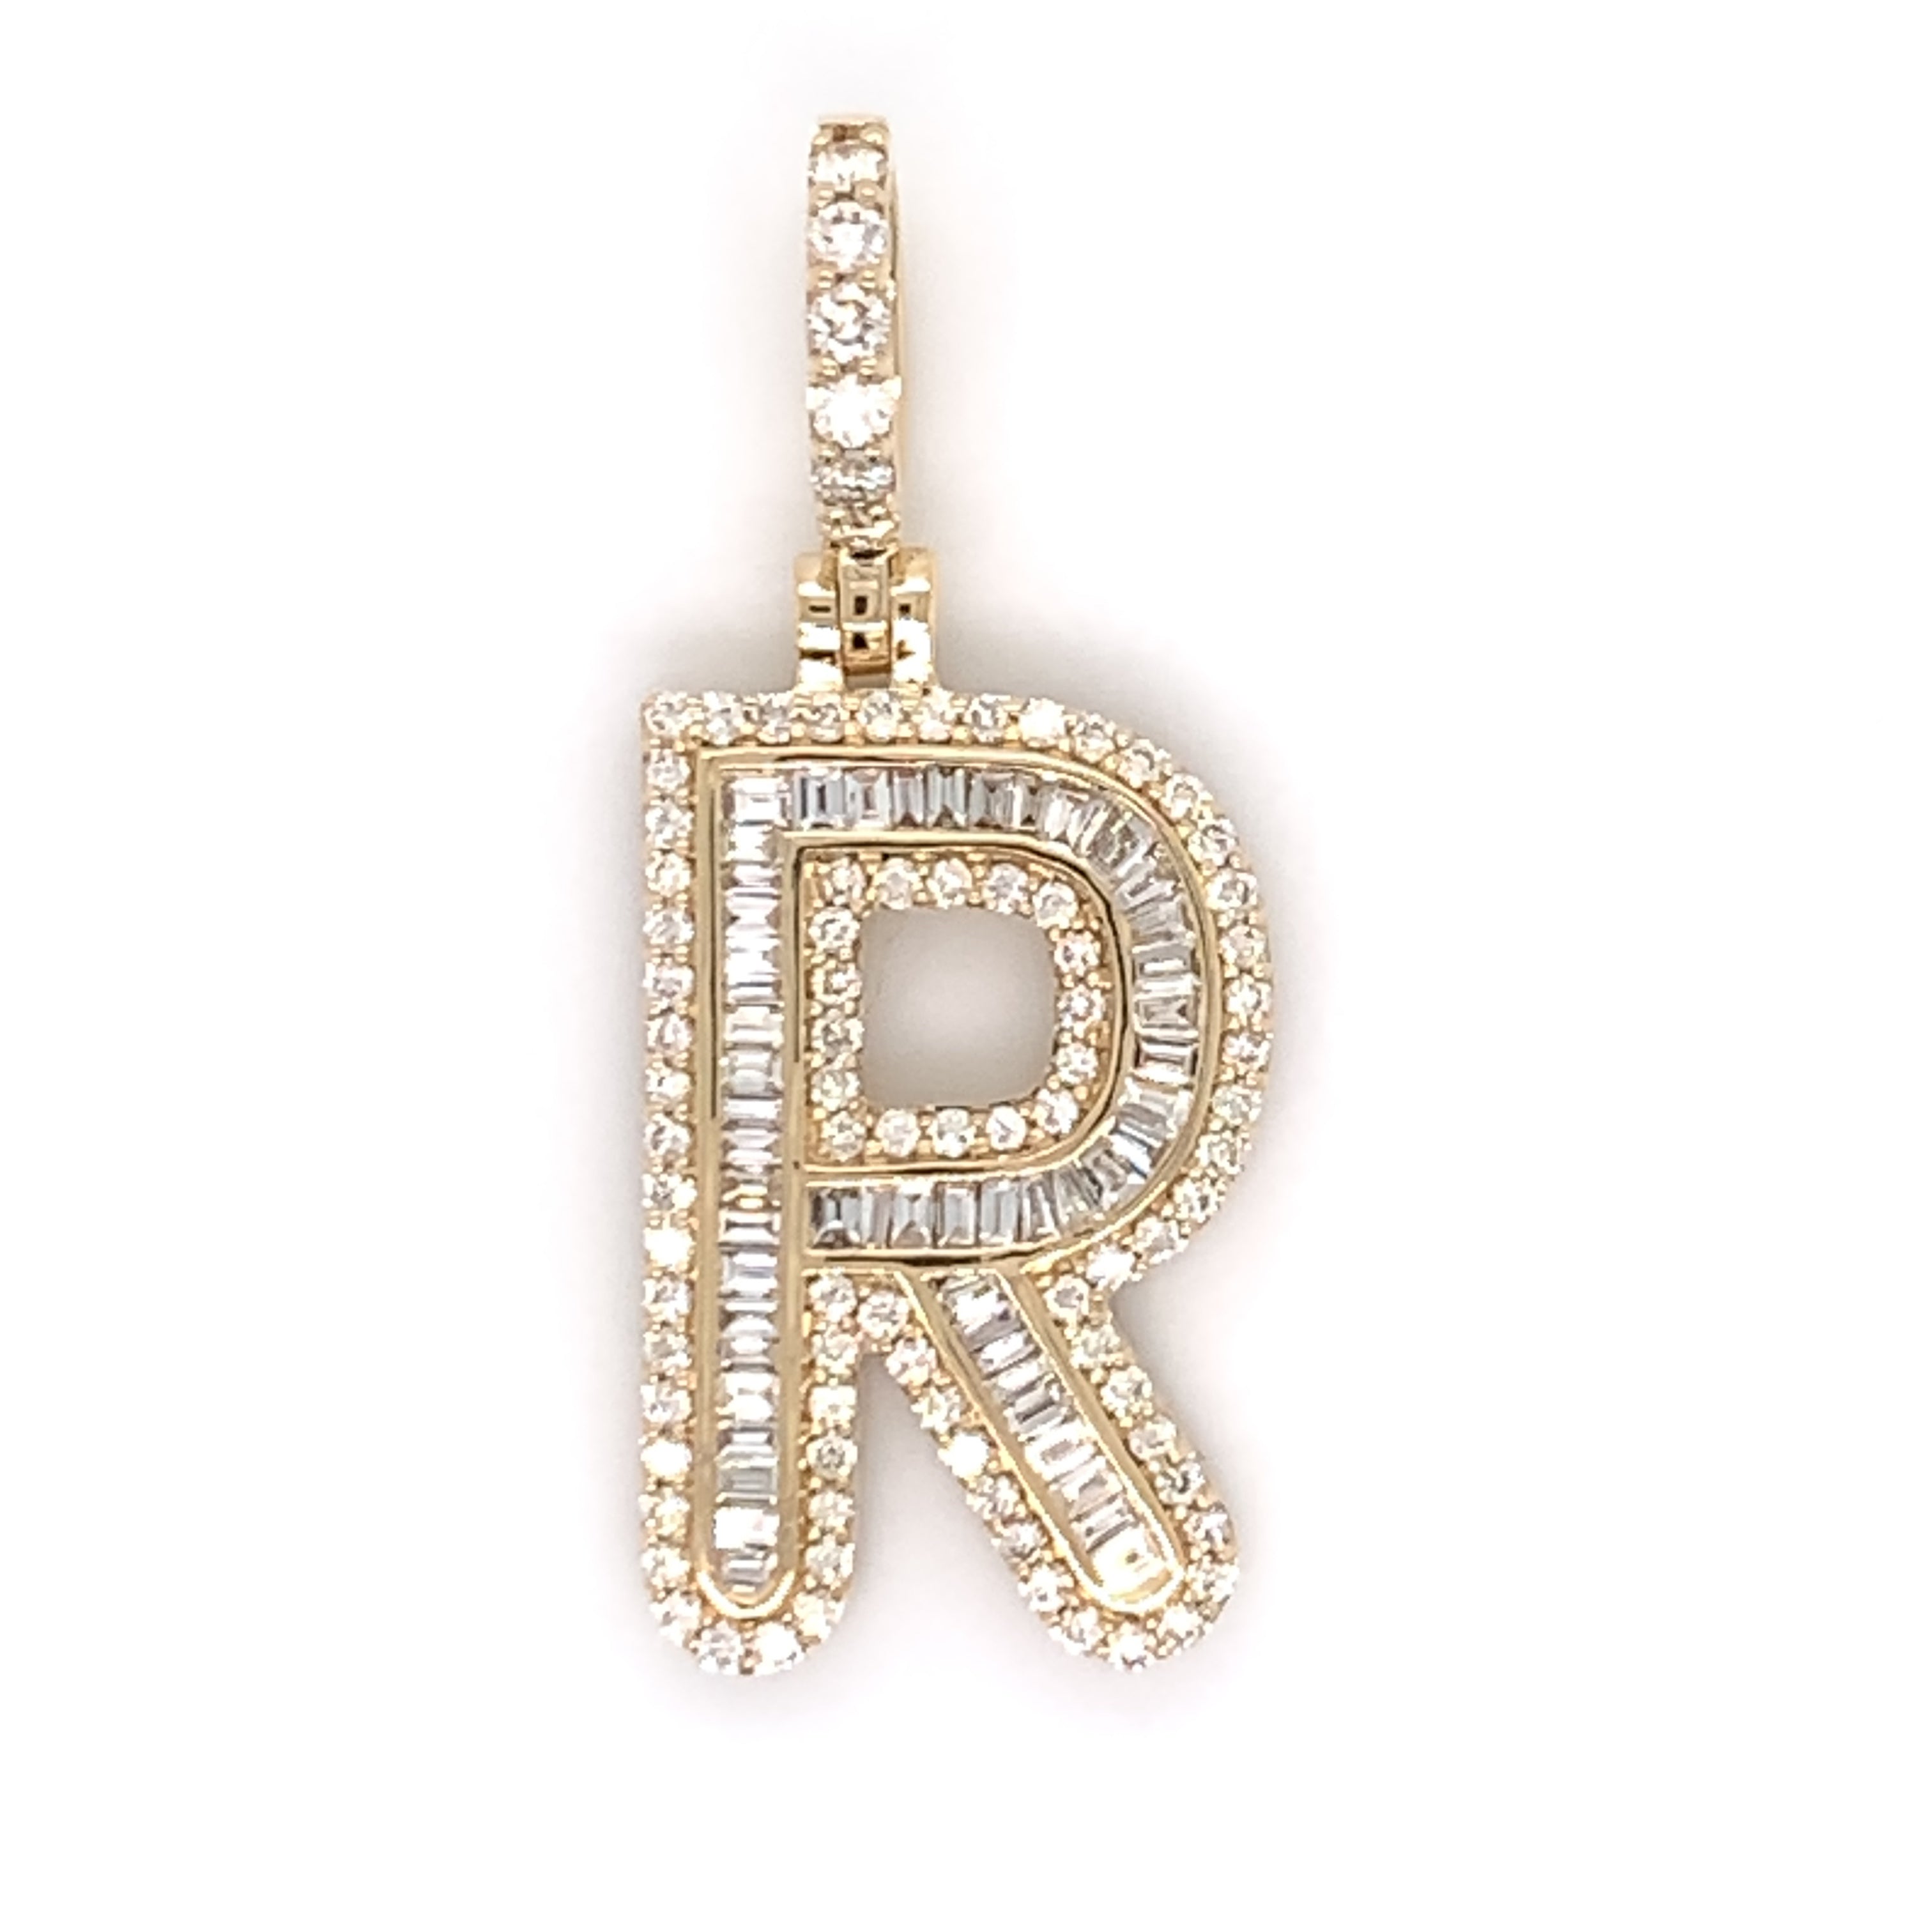 1.00 CT. Diamond Baguette Letter "R" Pendant in 10K Gold - White Carat - USA & Canada